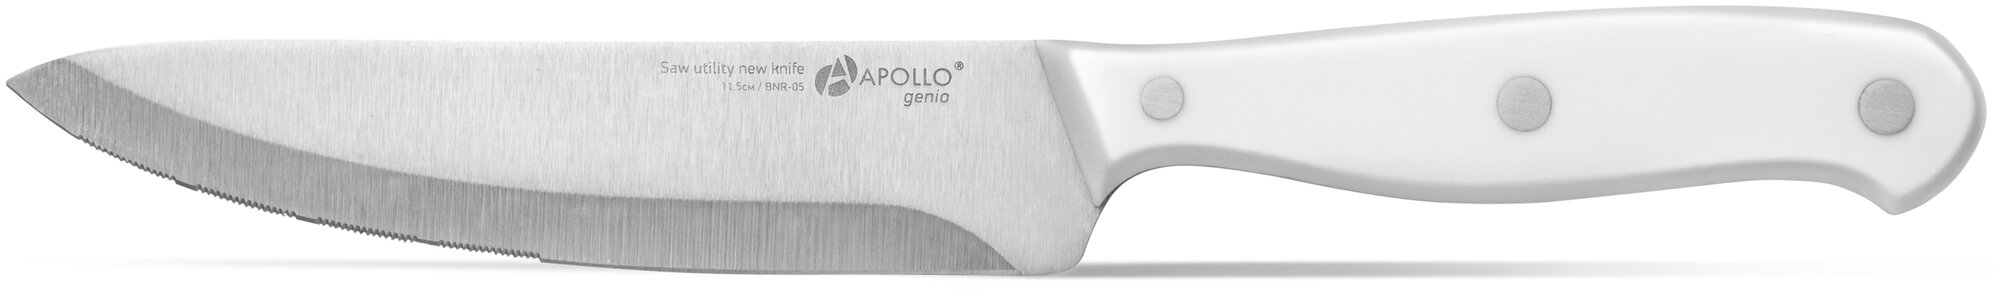 Нож для нарезки APOLLO Genio Bonjour, 11,5 см